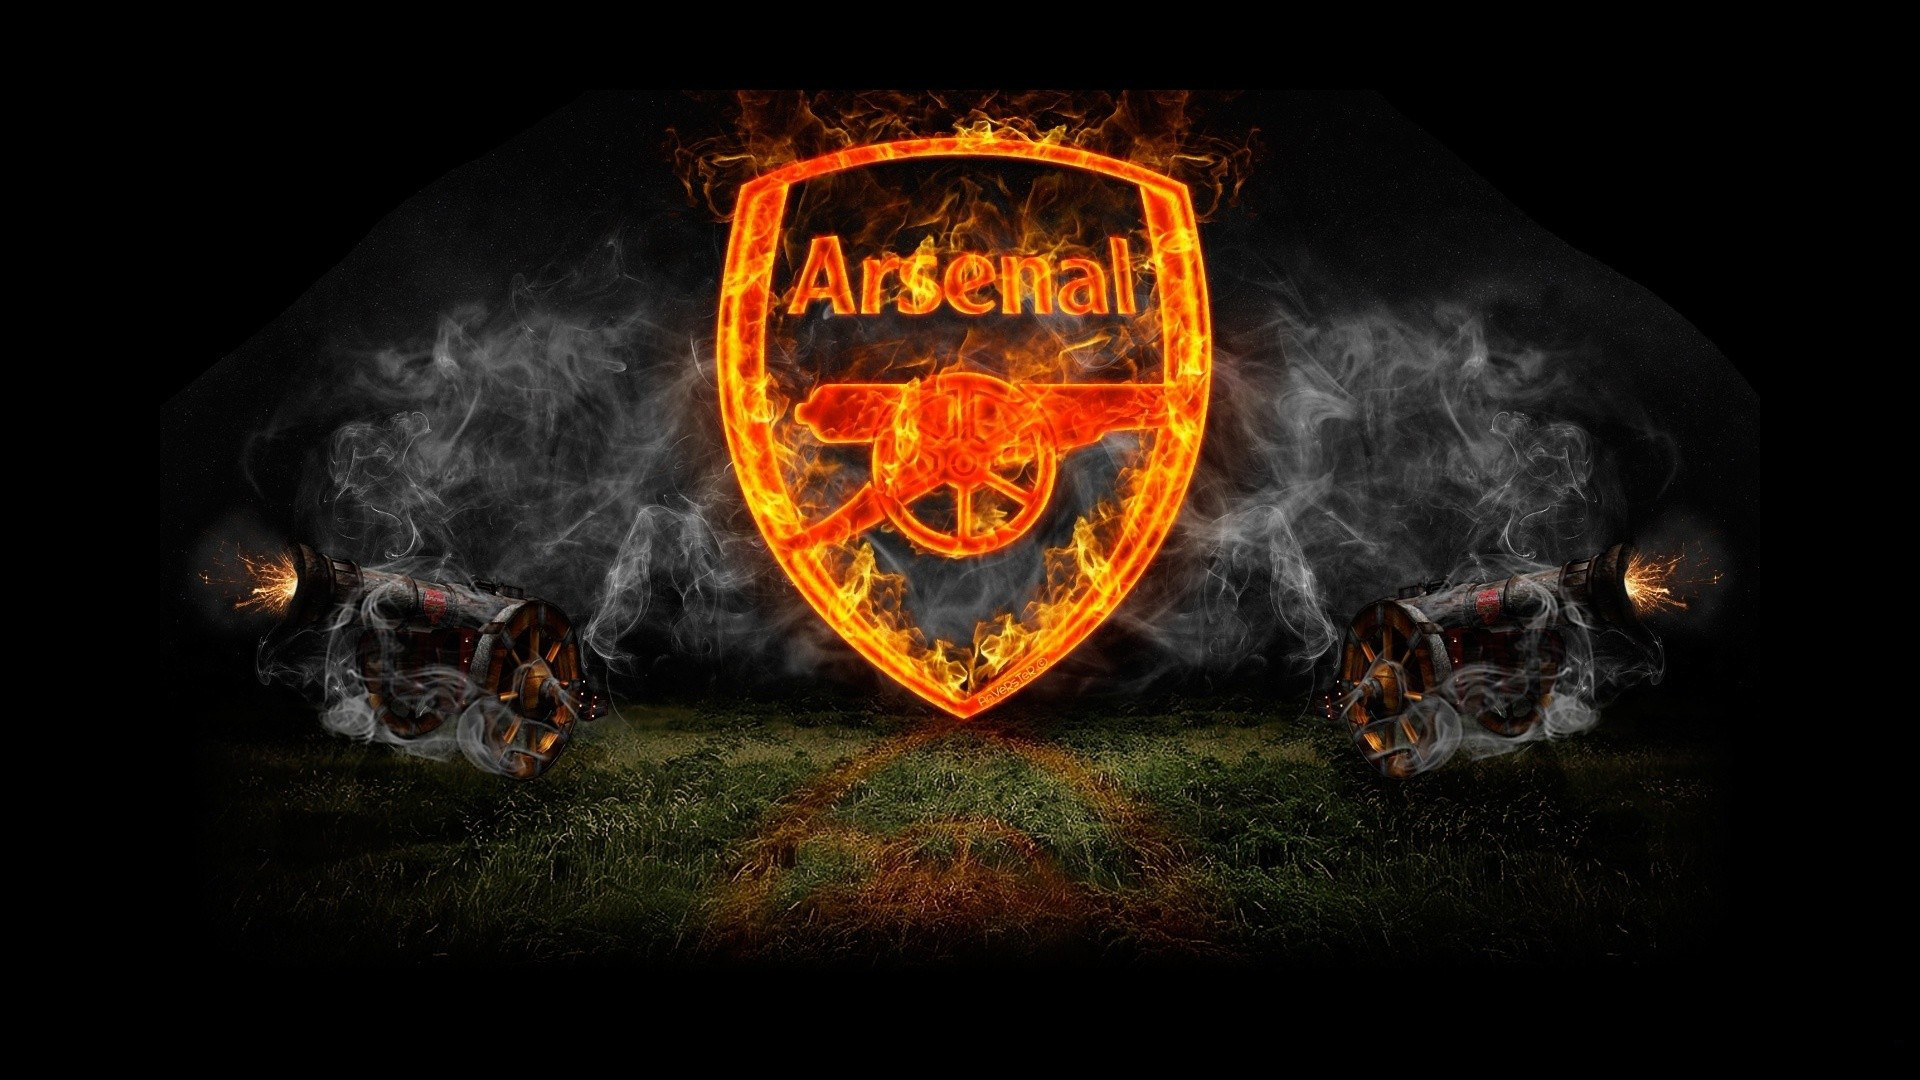 1920x1080 Download Fullsize Image Â· Arsenal FC Football Logo HD Wallpaper Cool ...